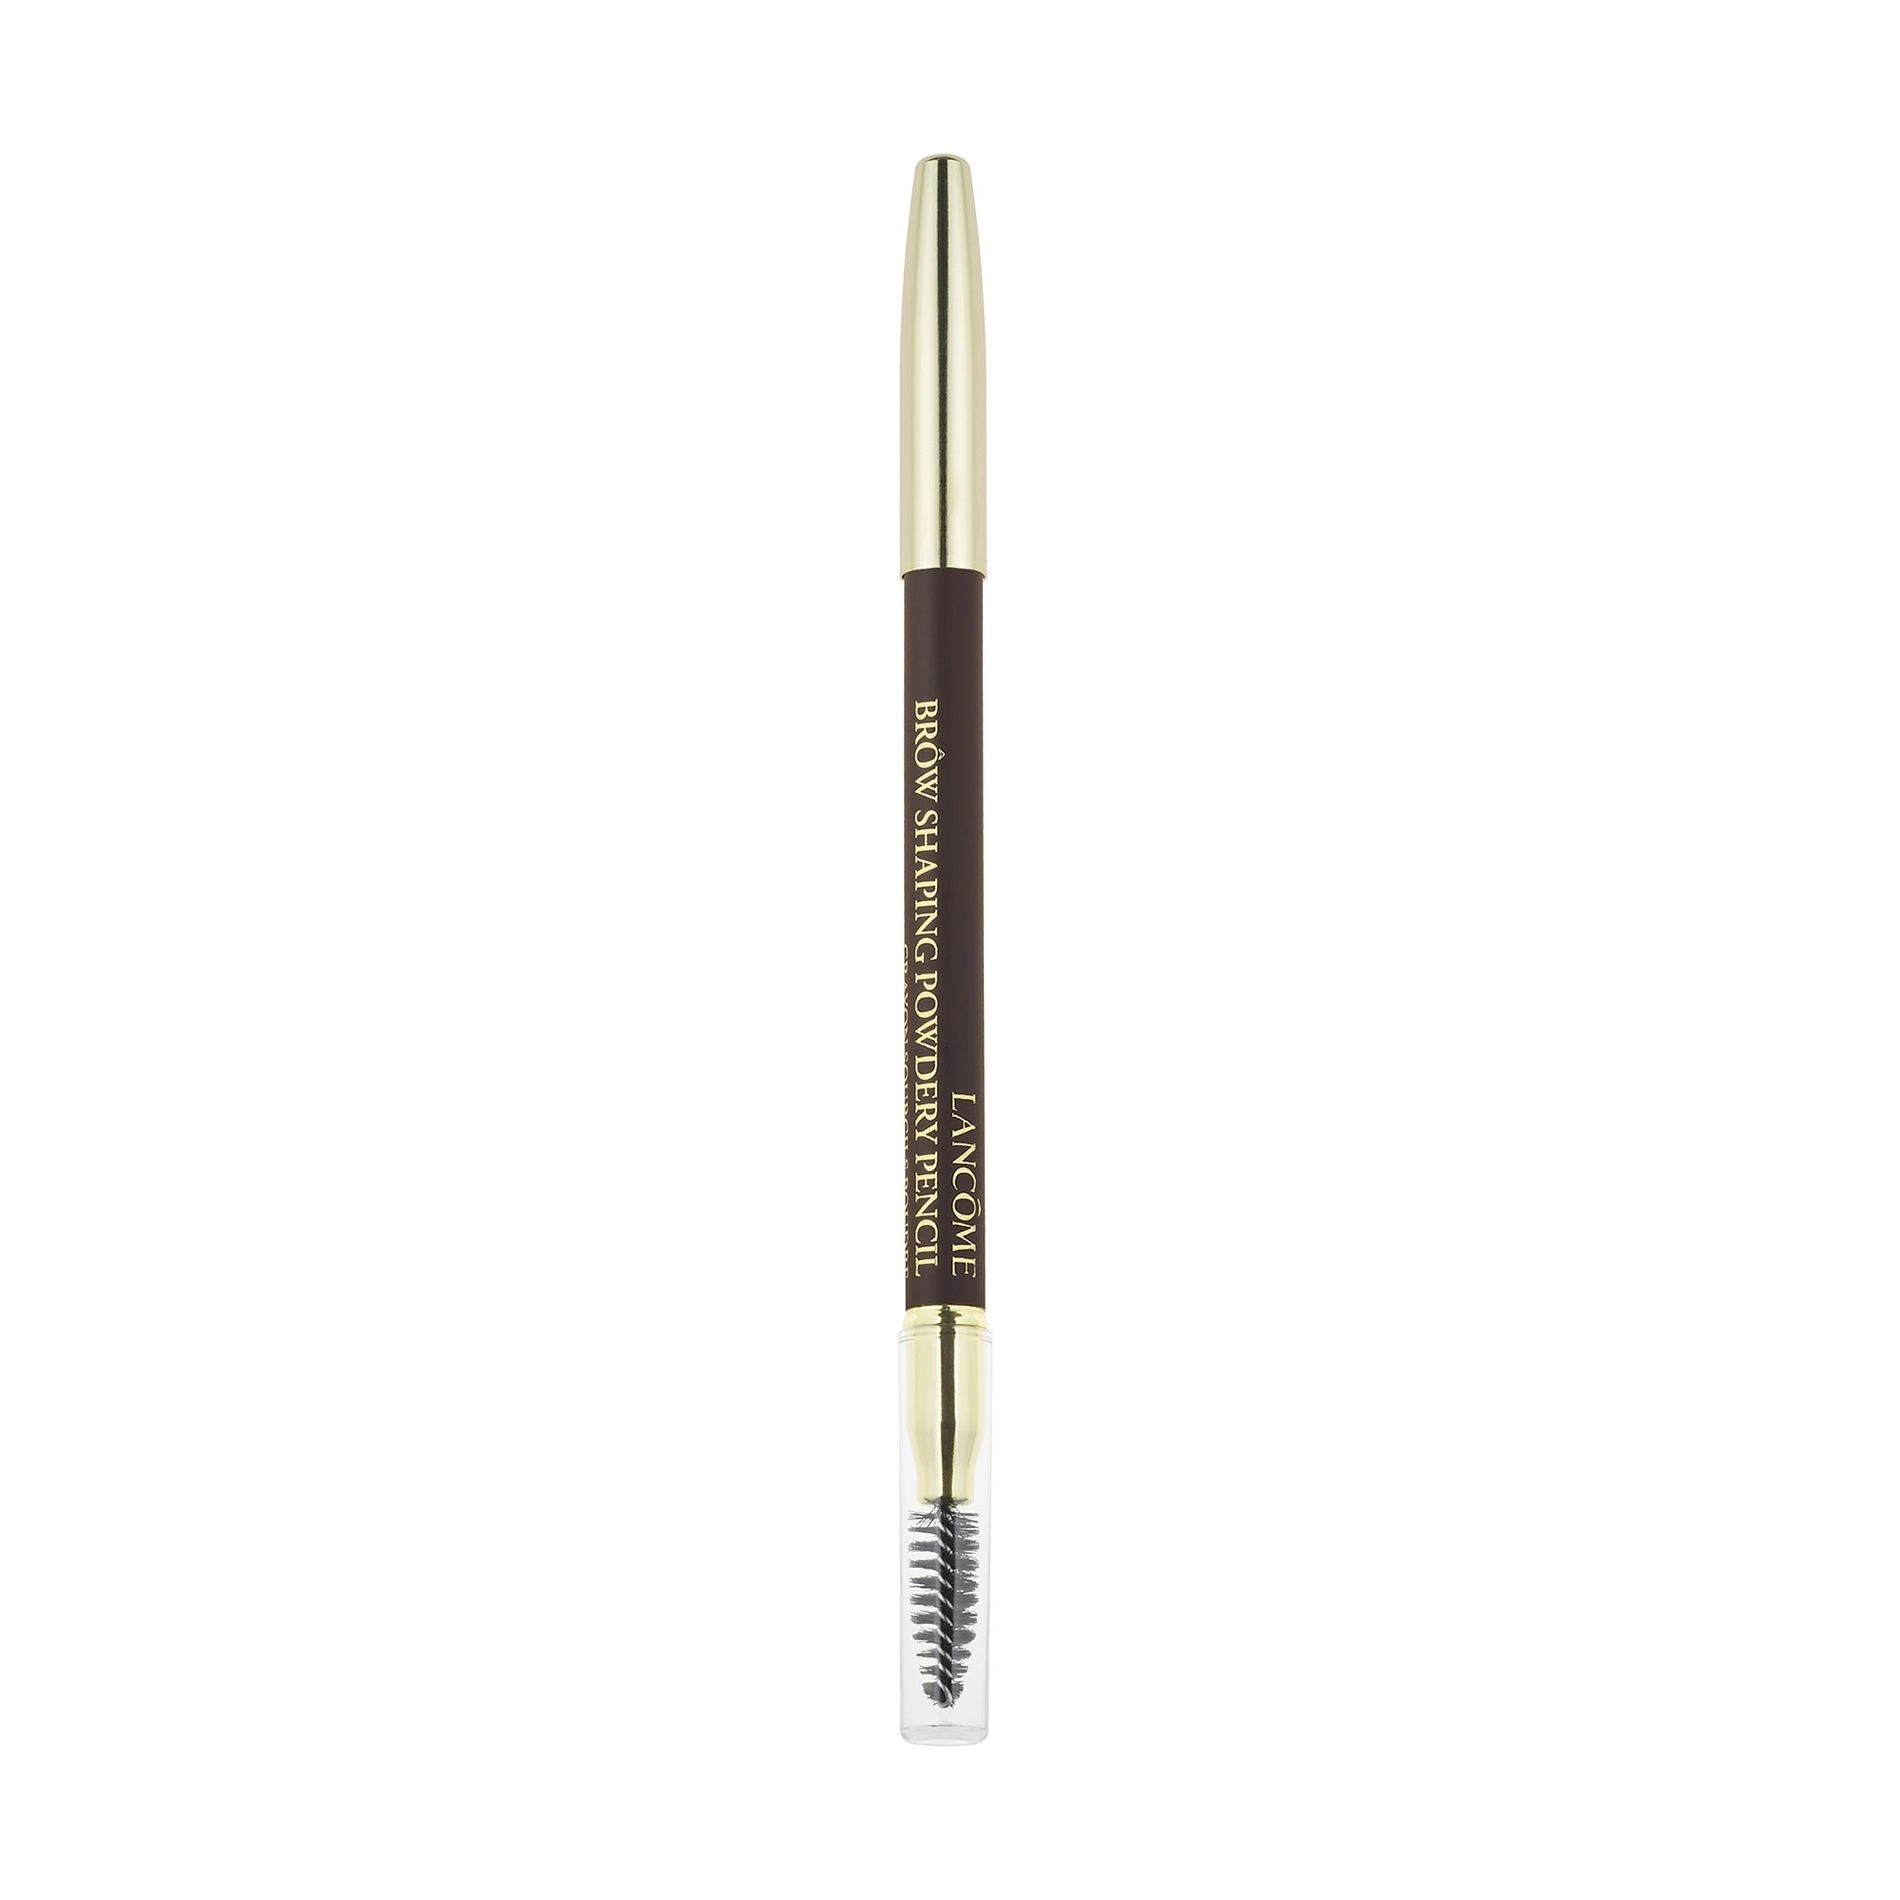 Lancome Карандаш для бровей Brow Shaping Powdery Pencil 08 Dark Brown, 1.19 г - фото N1